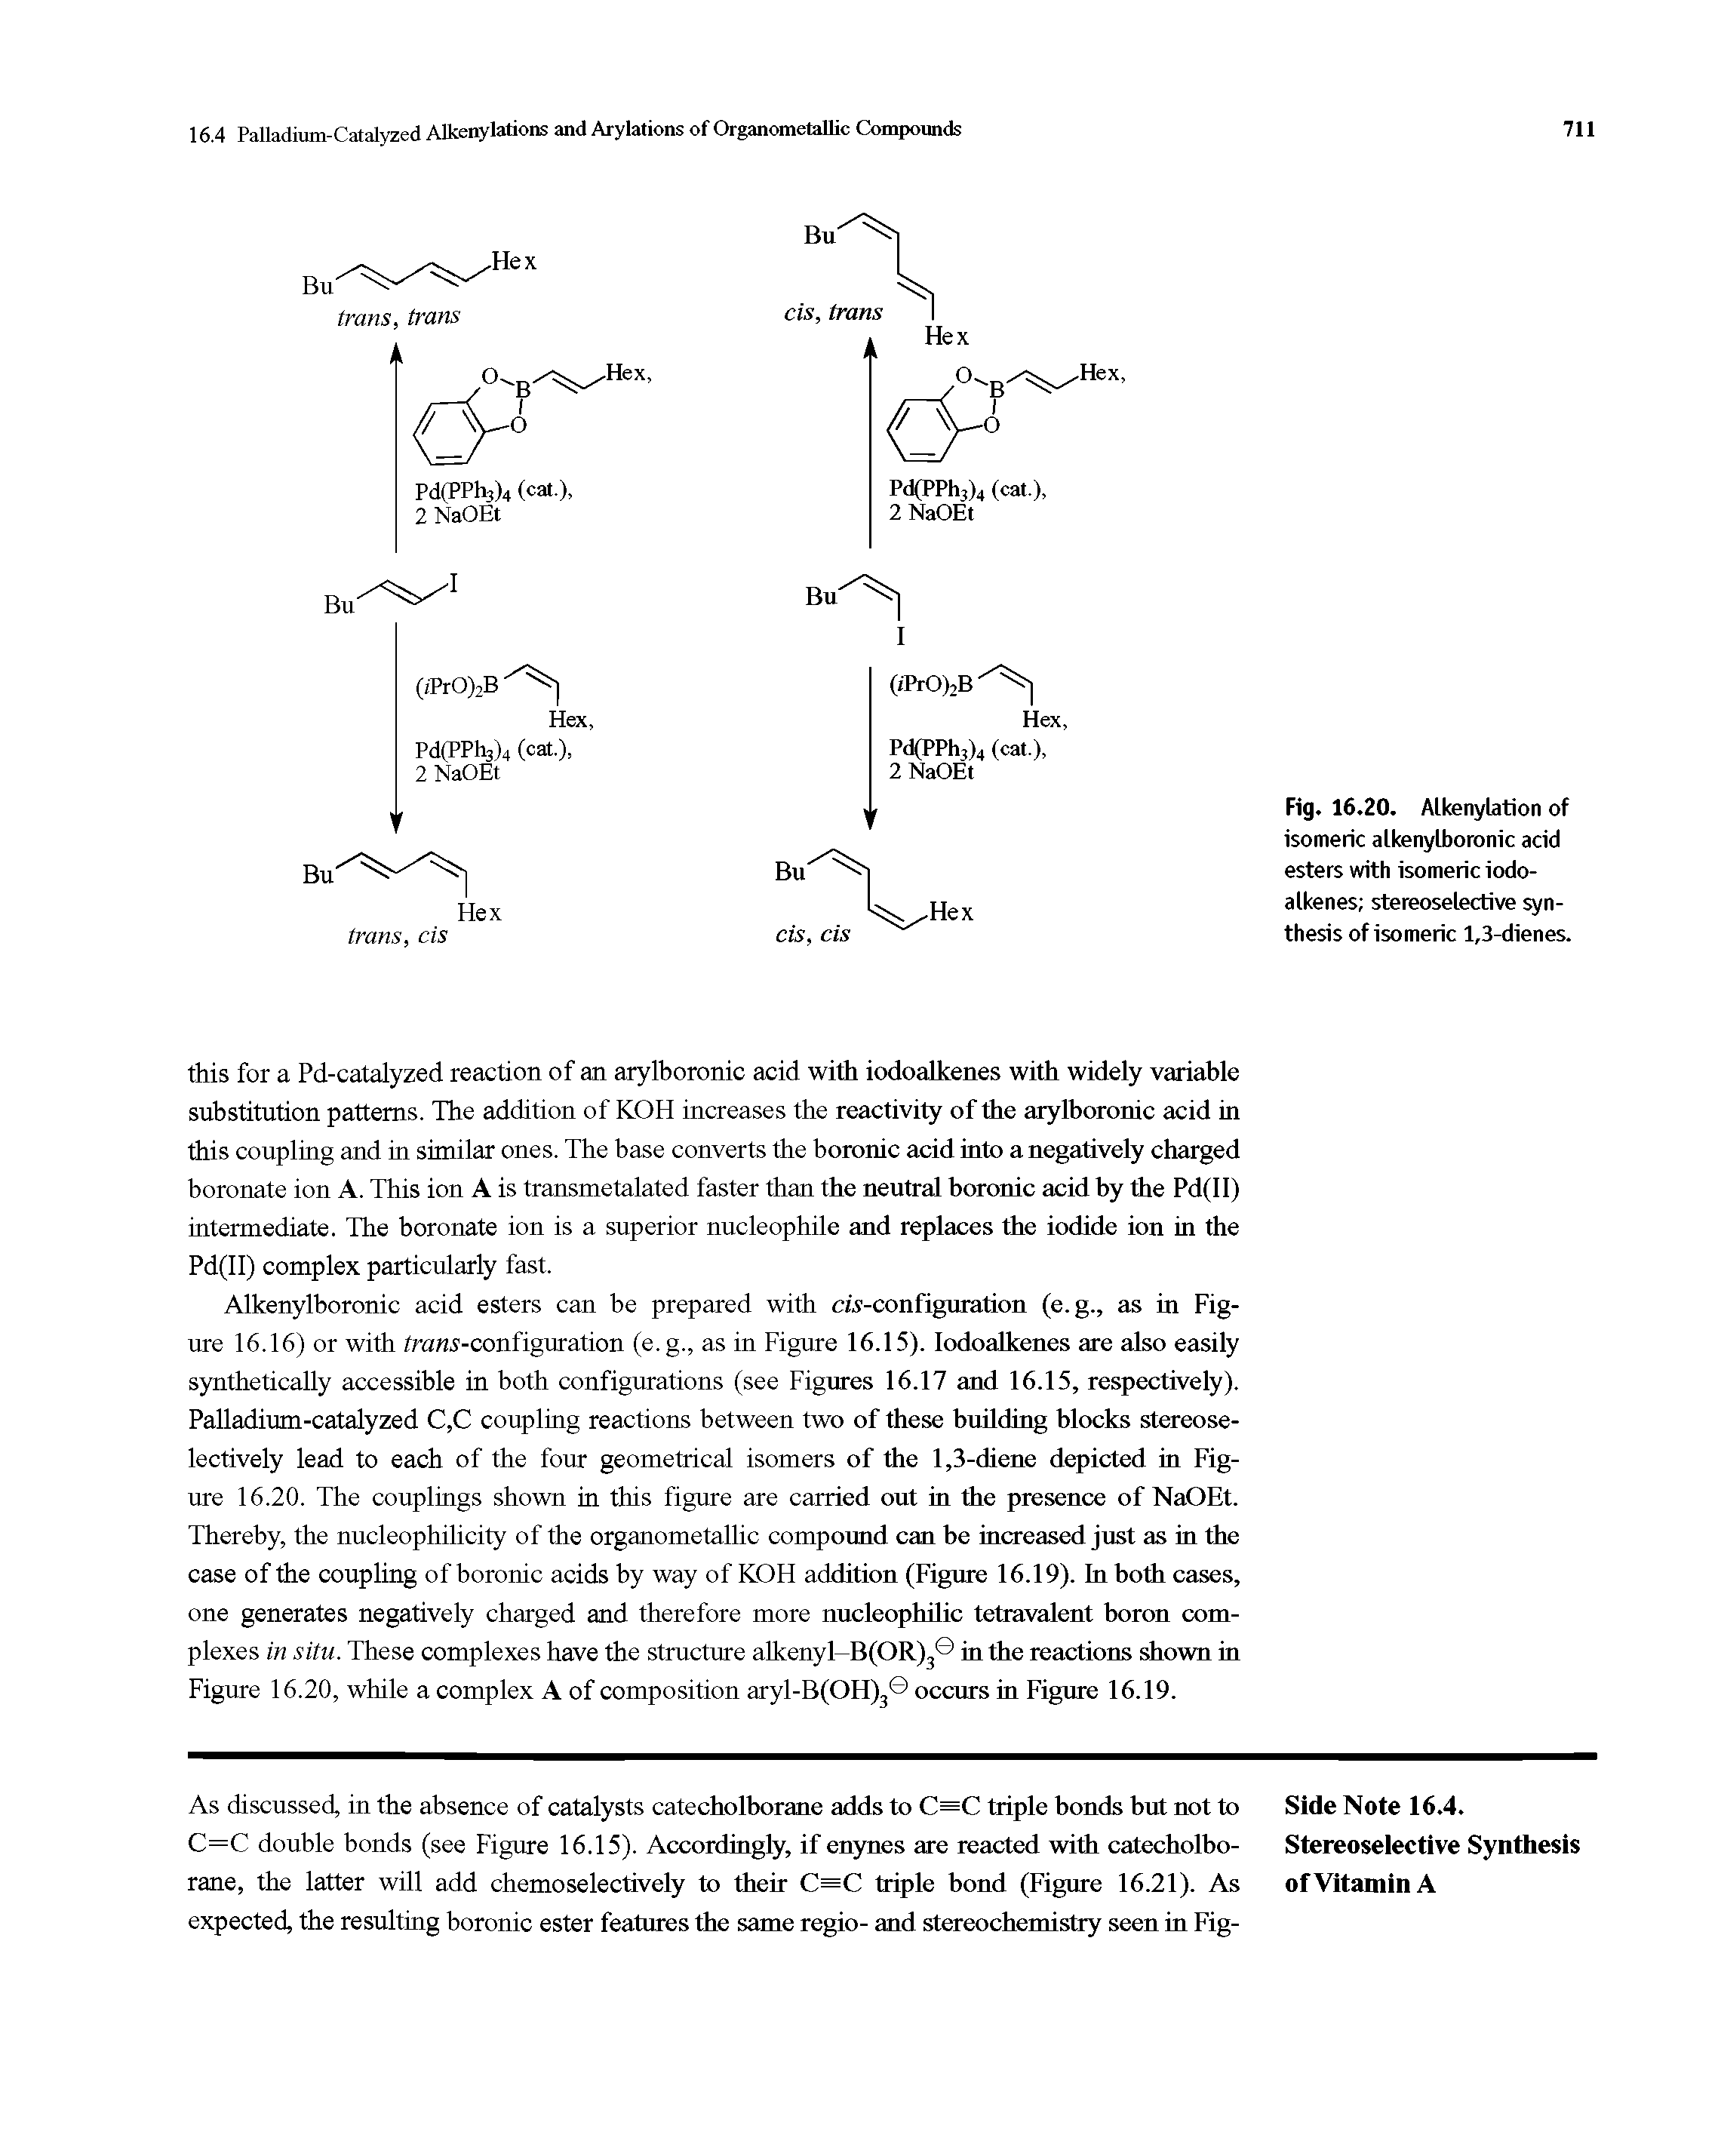 Fig. 16.20. Alkenylation of isomeric alkenylboronic acid esters with isomeric iodo-alkenes stereoselective synthesis of isomeric 1,3-dienes.